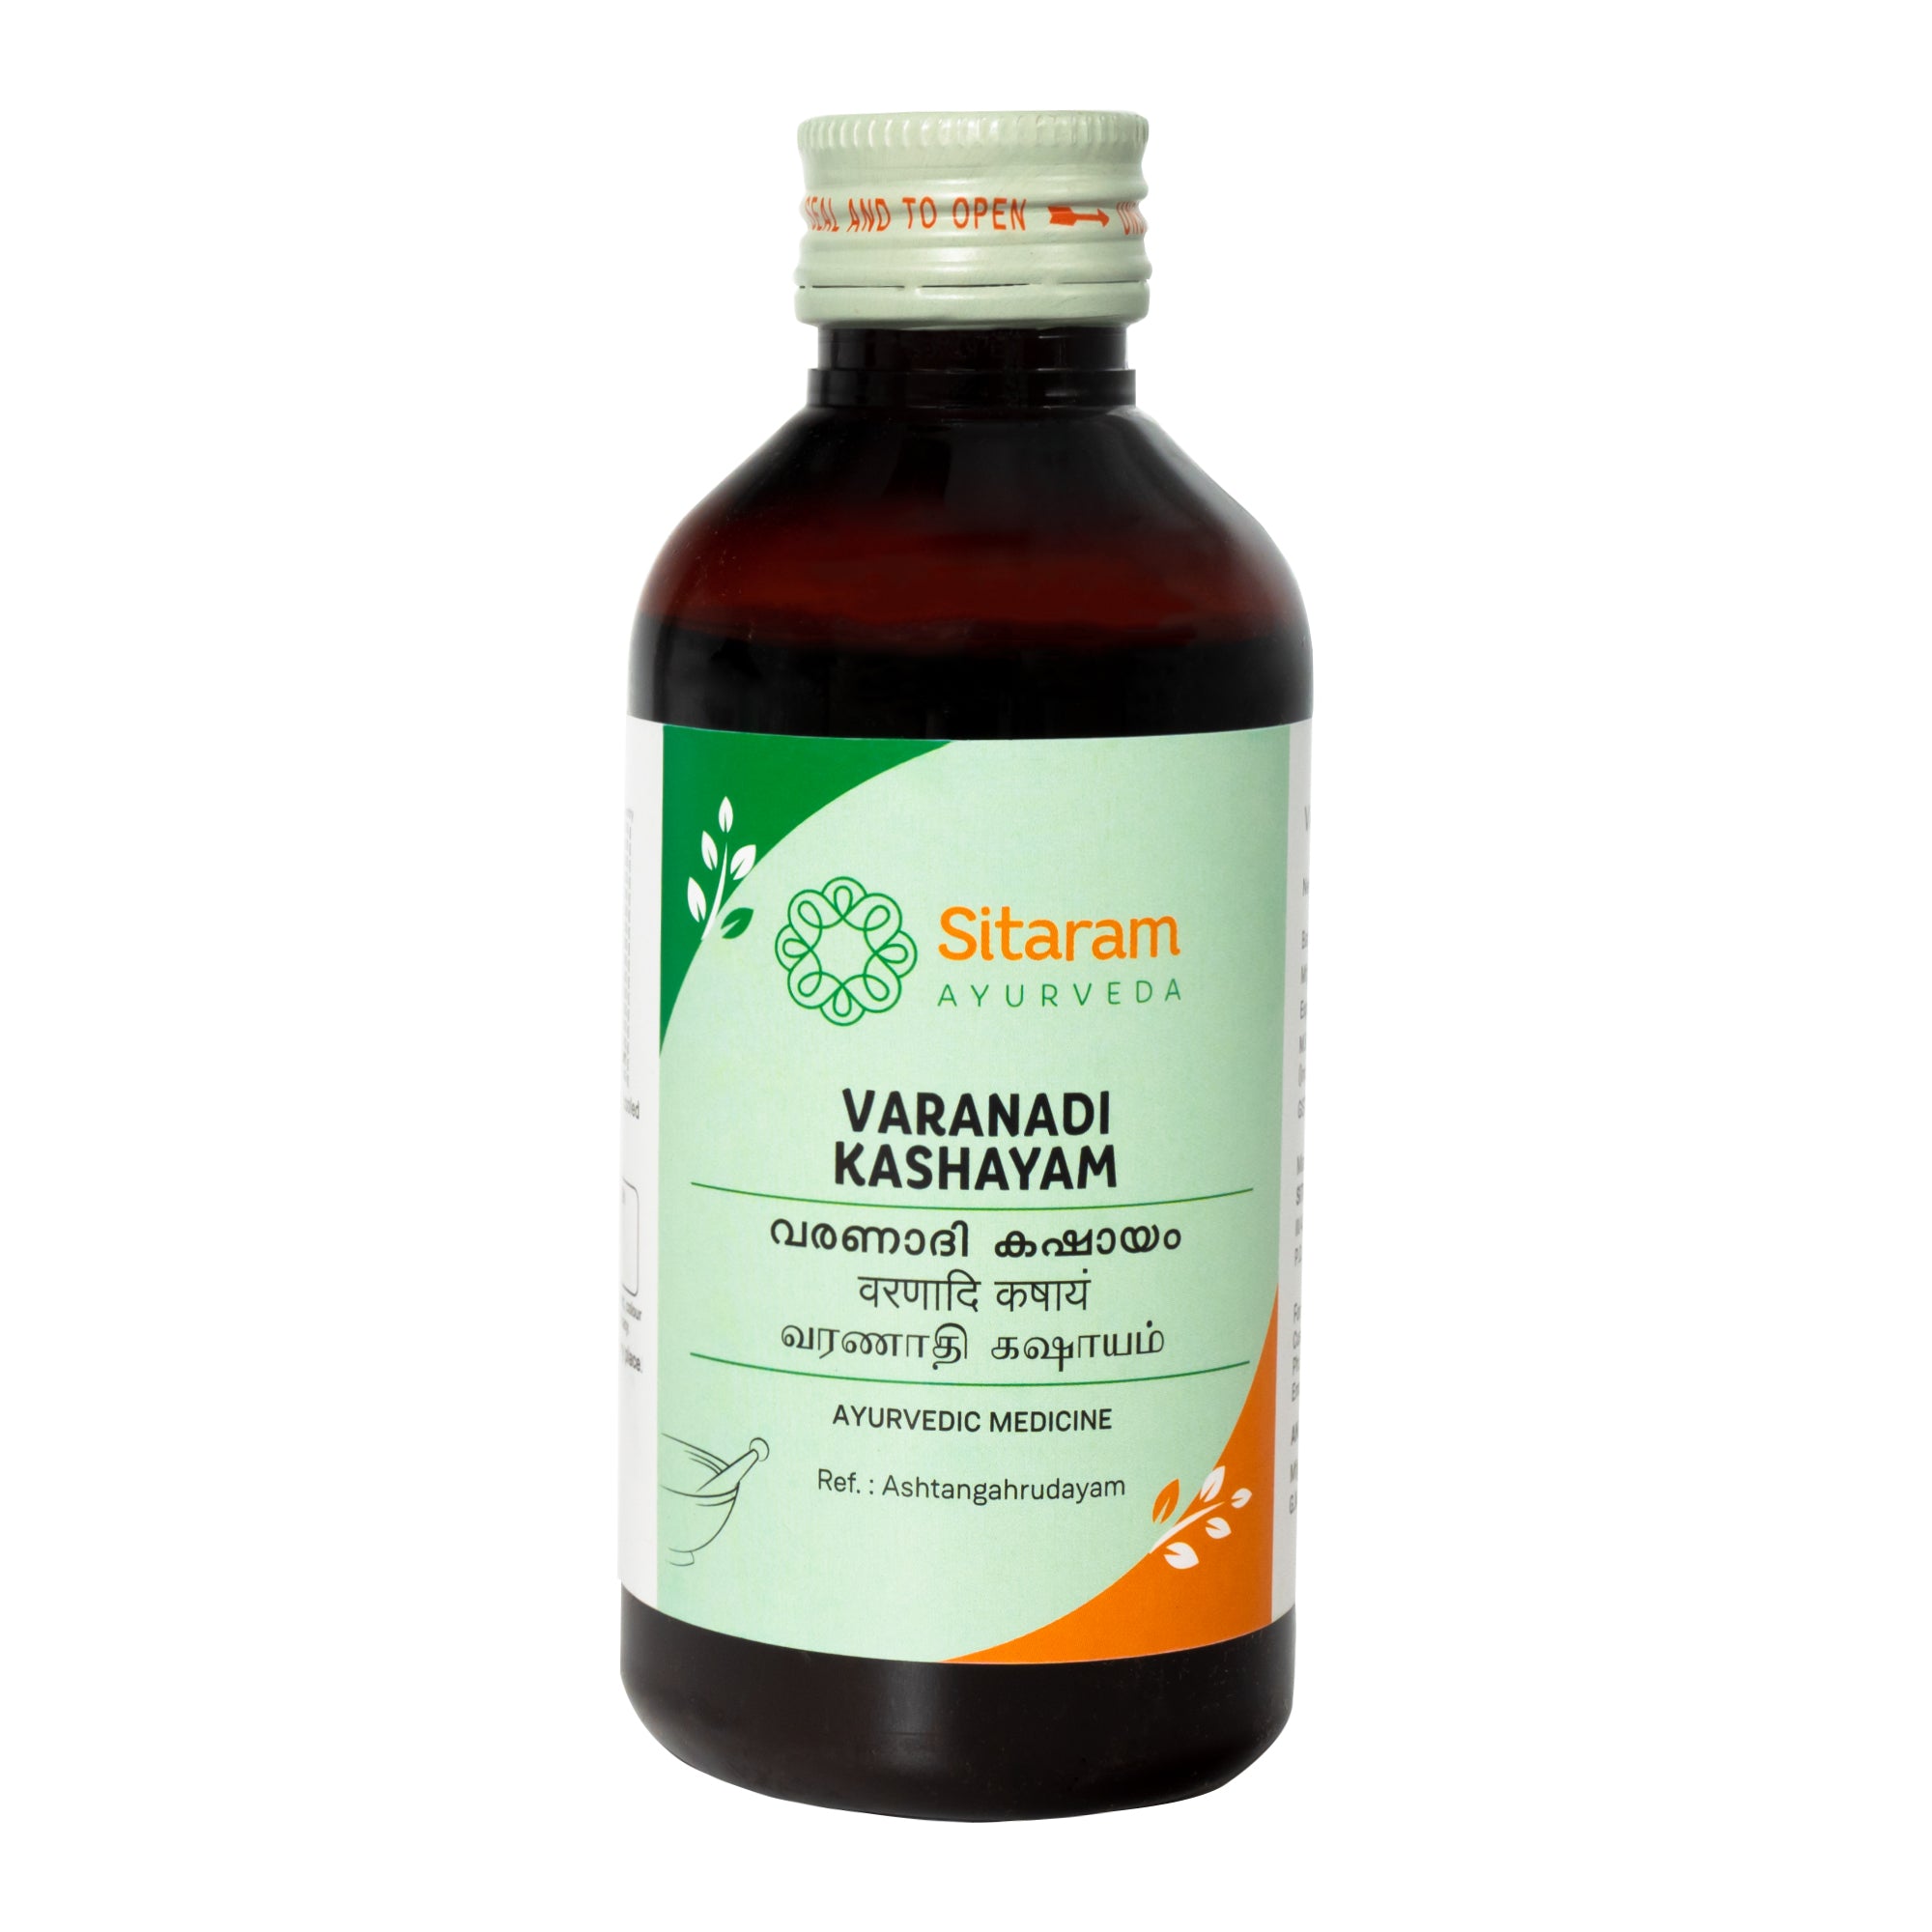 Sitaram Ayurveda Varanadi Kashayam 200Ml - Pack of 2 (Prescription Medication)